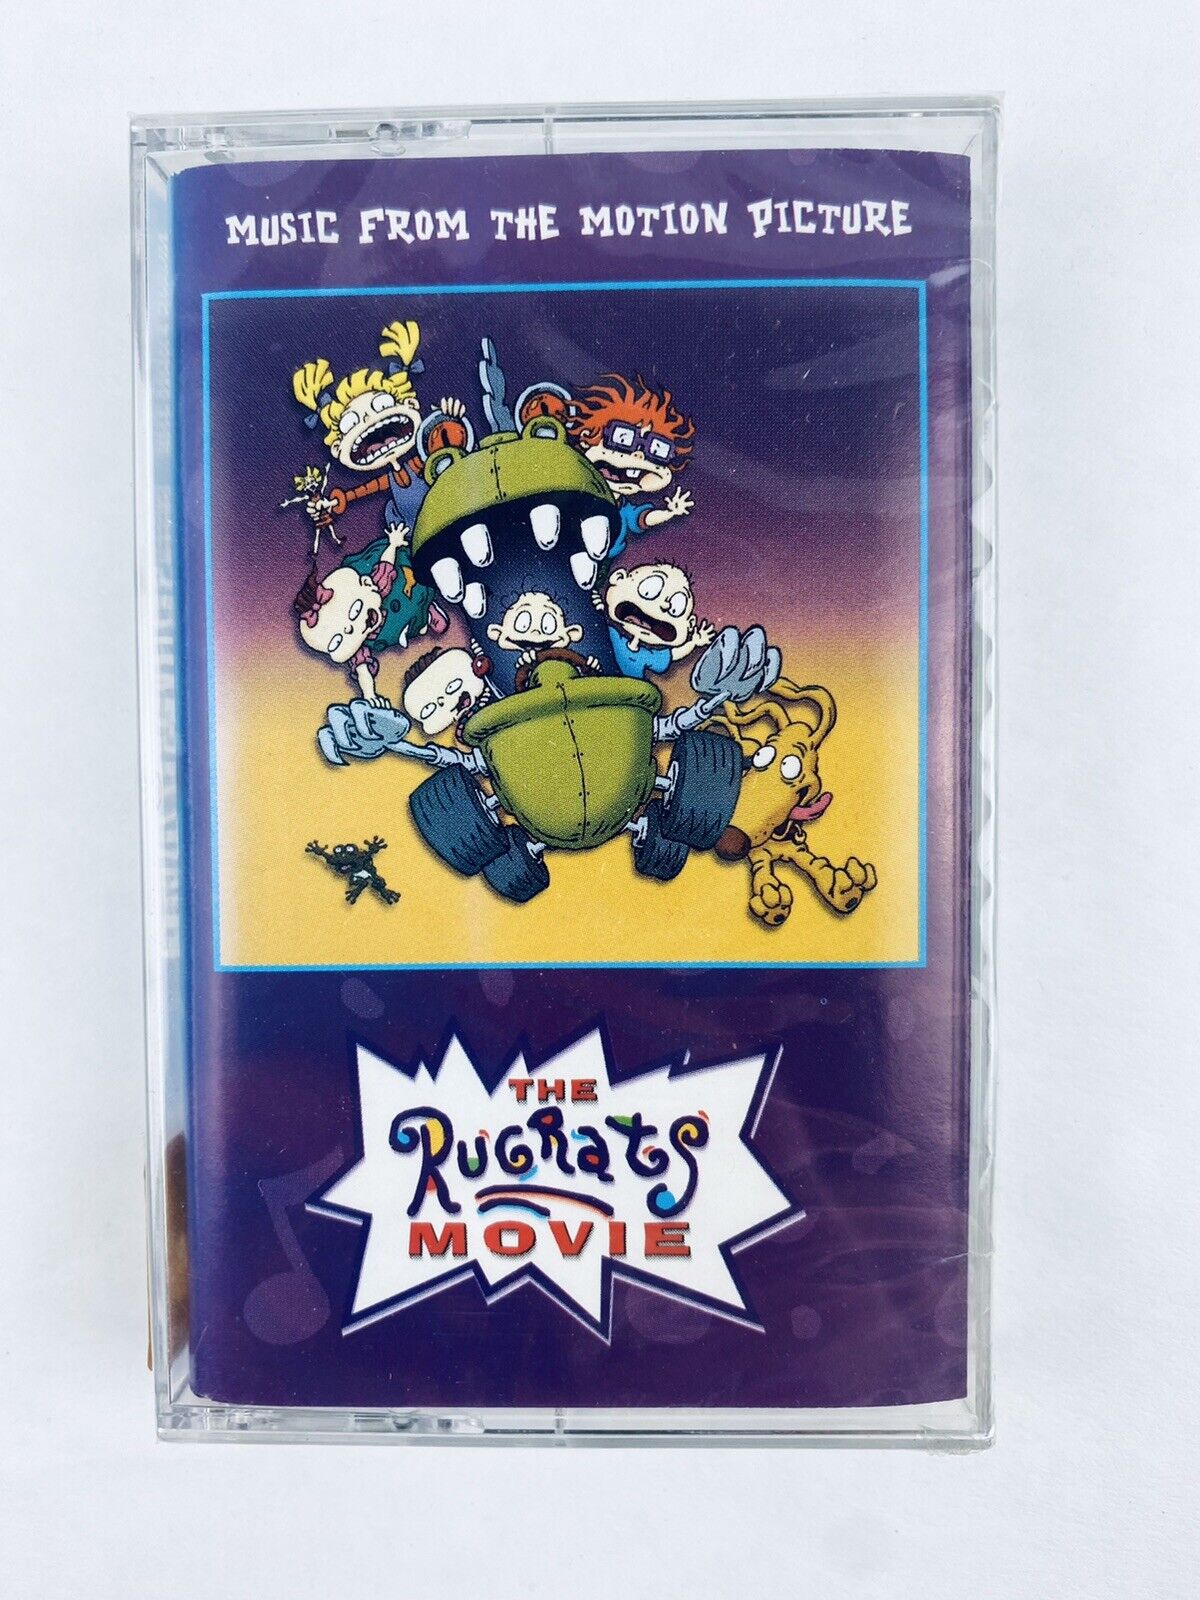 NEW The Rugrats Movie Soundtrack Cassette Tape SEALED + Hype Sticker Vintage 90s